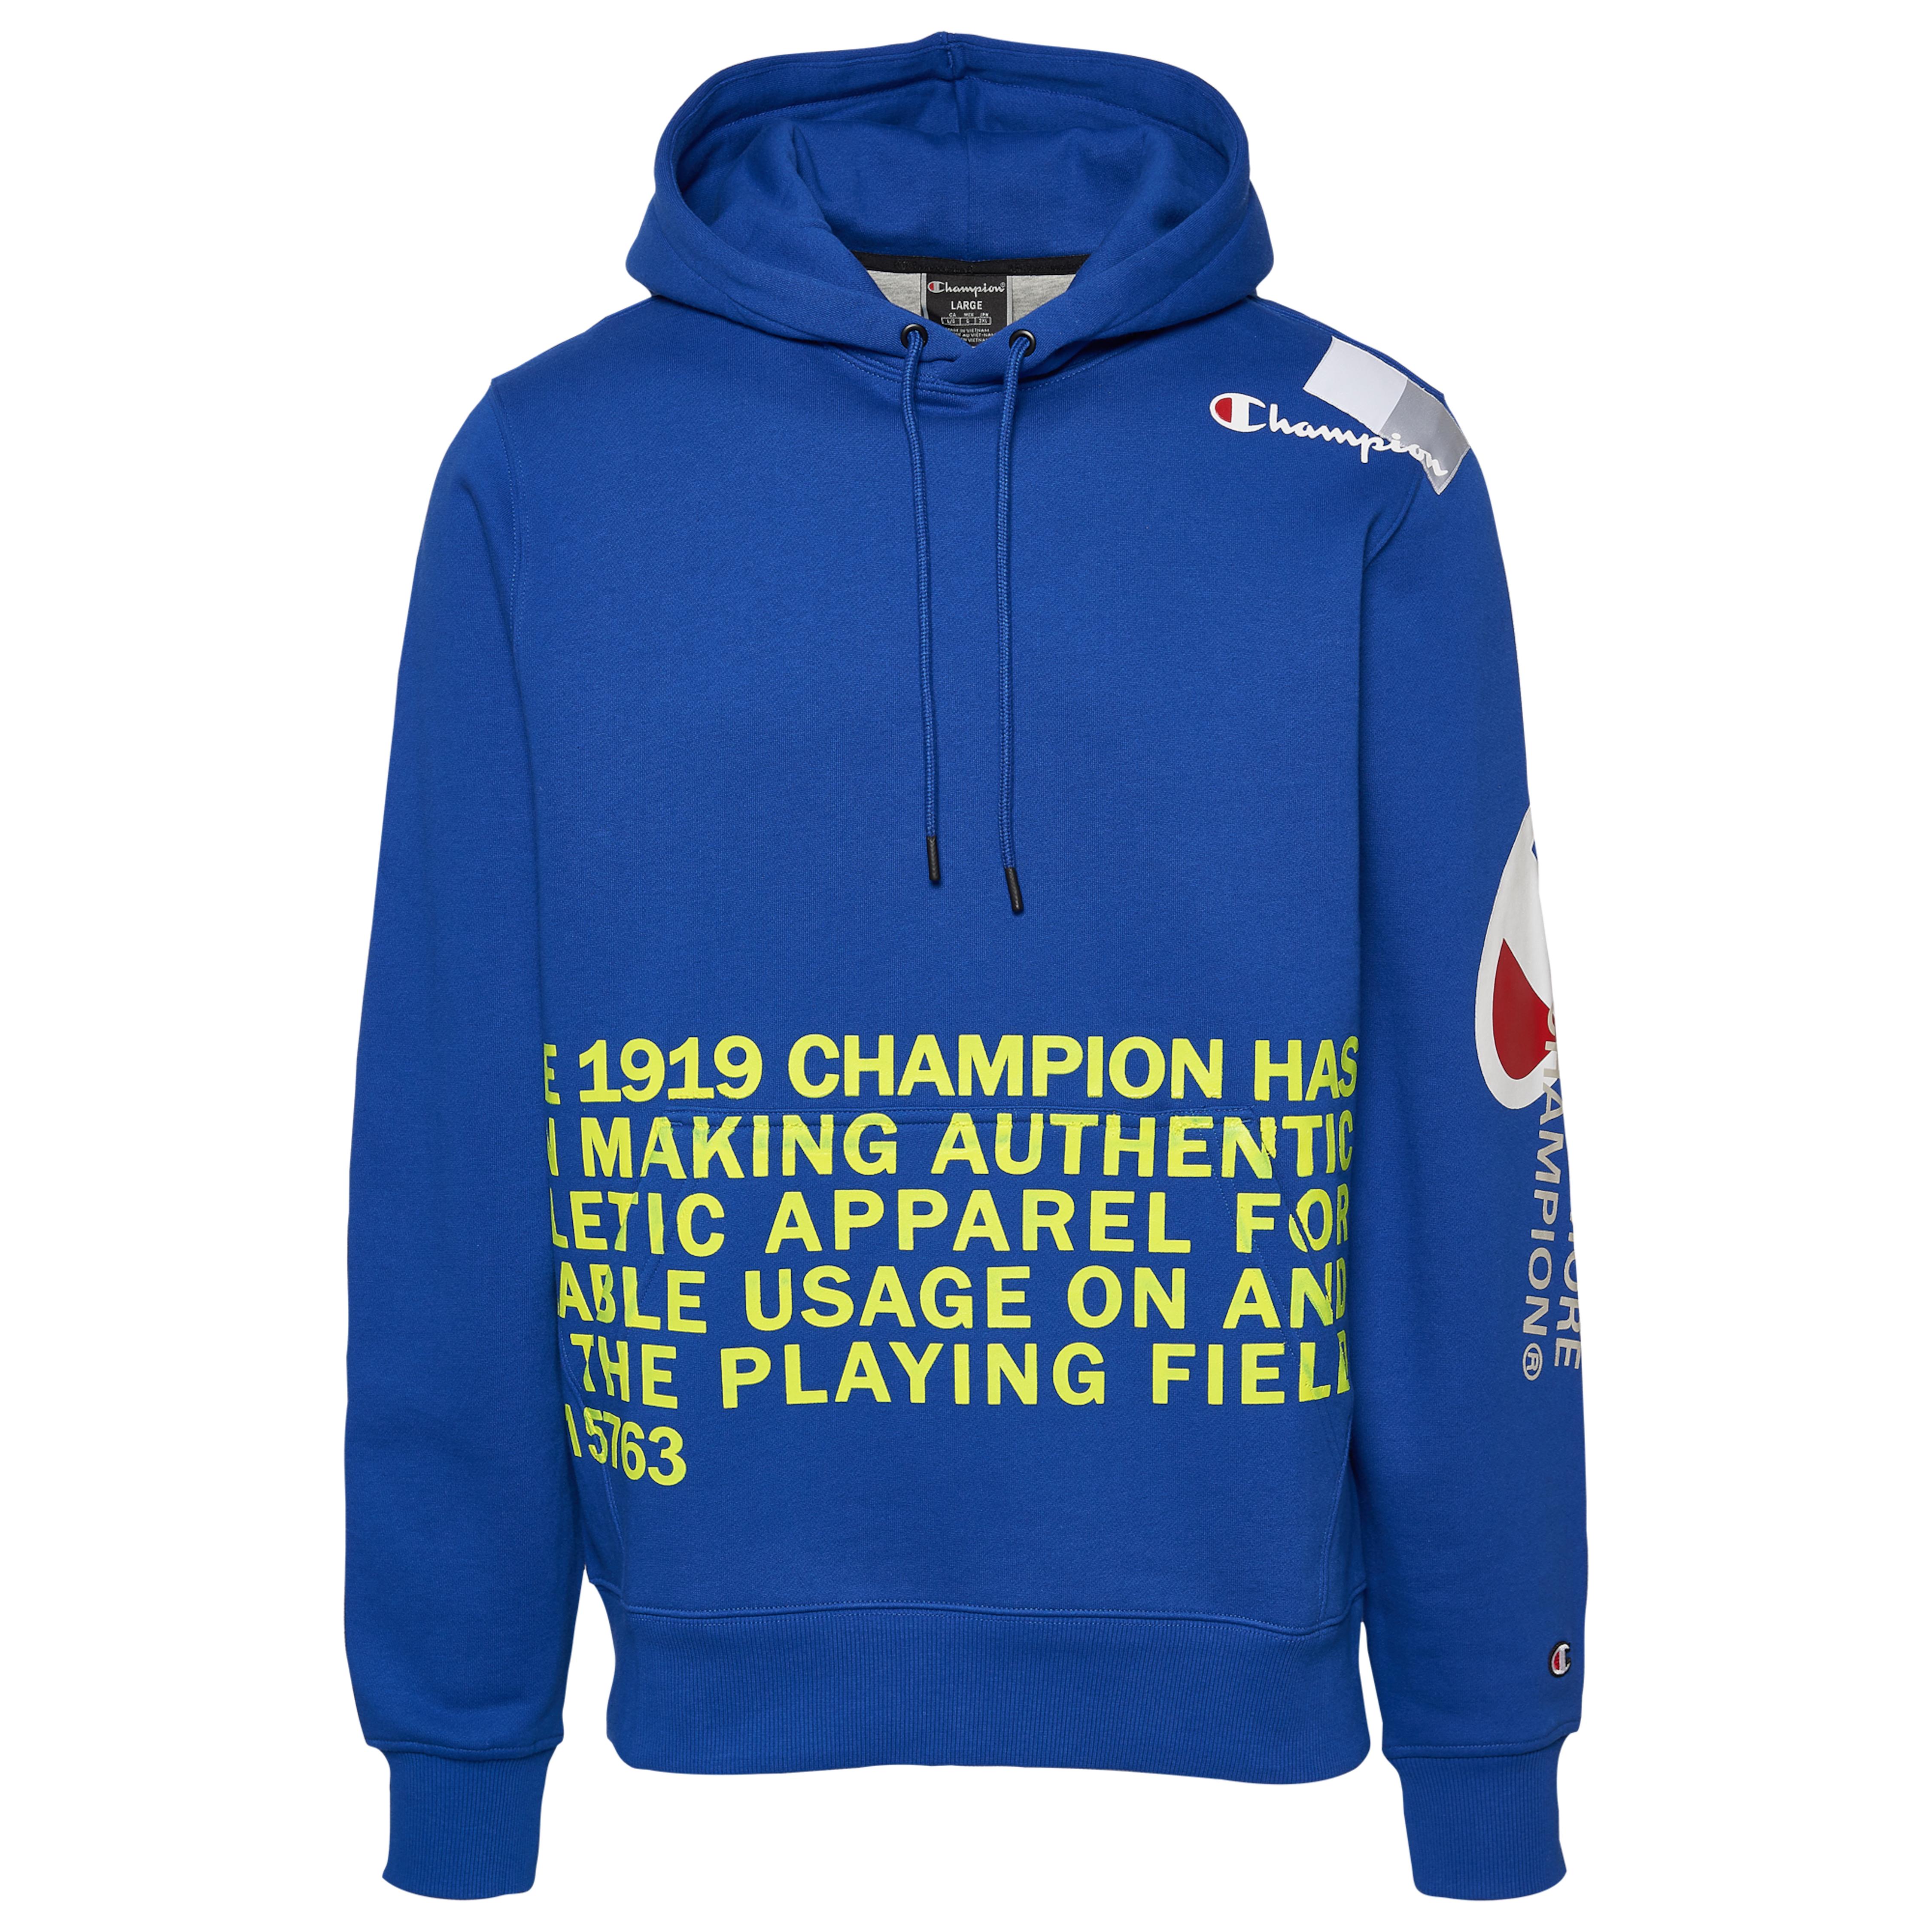 champion 15763 hoodie